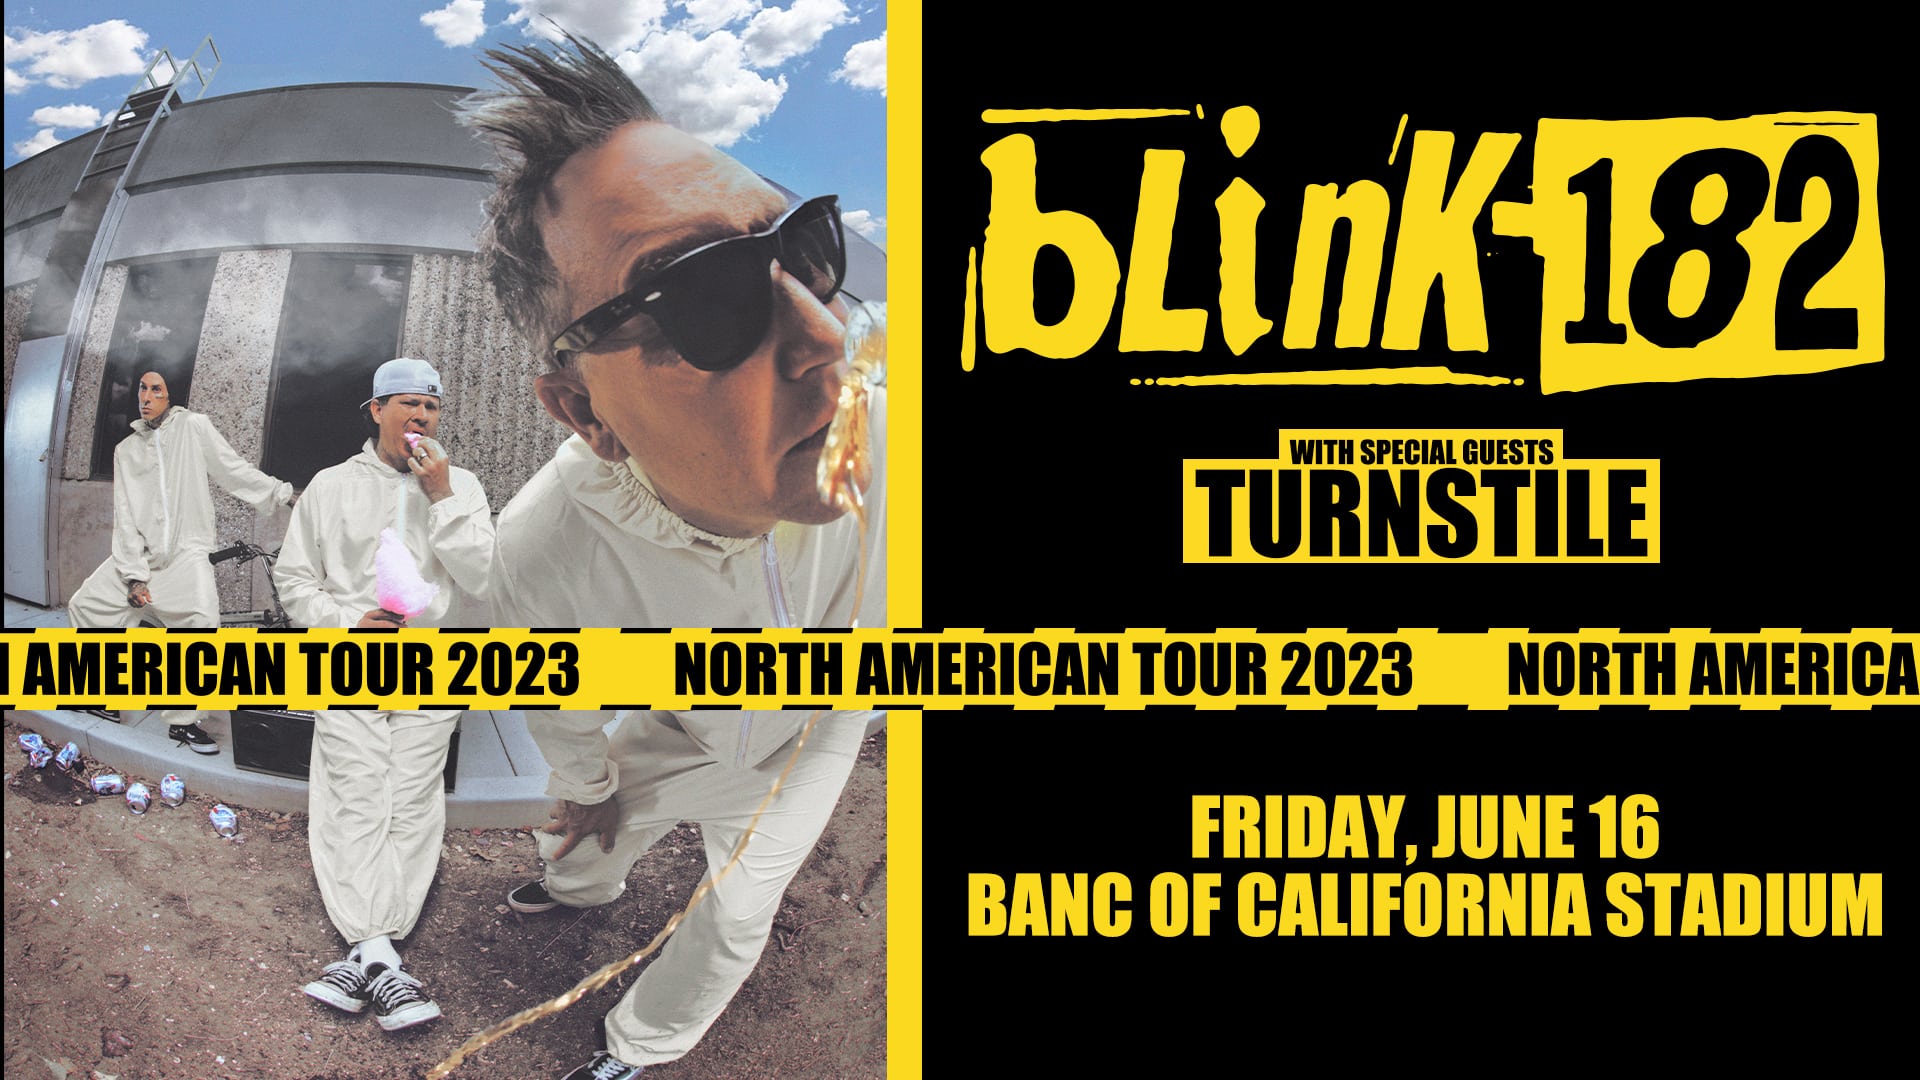 Blink 182 California Wallpapers